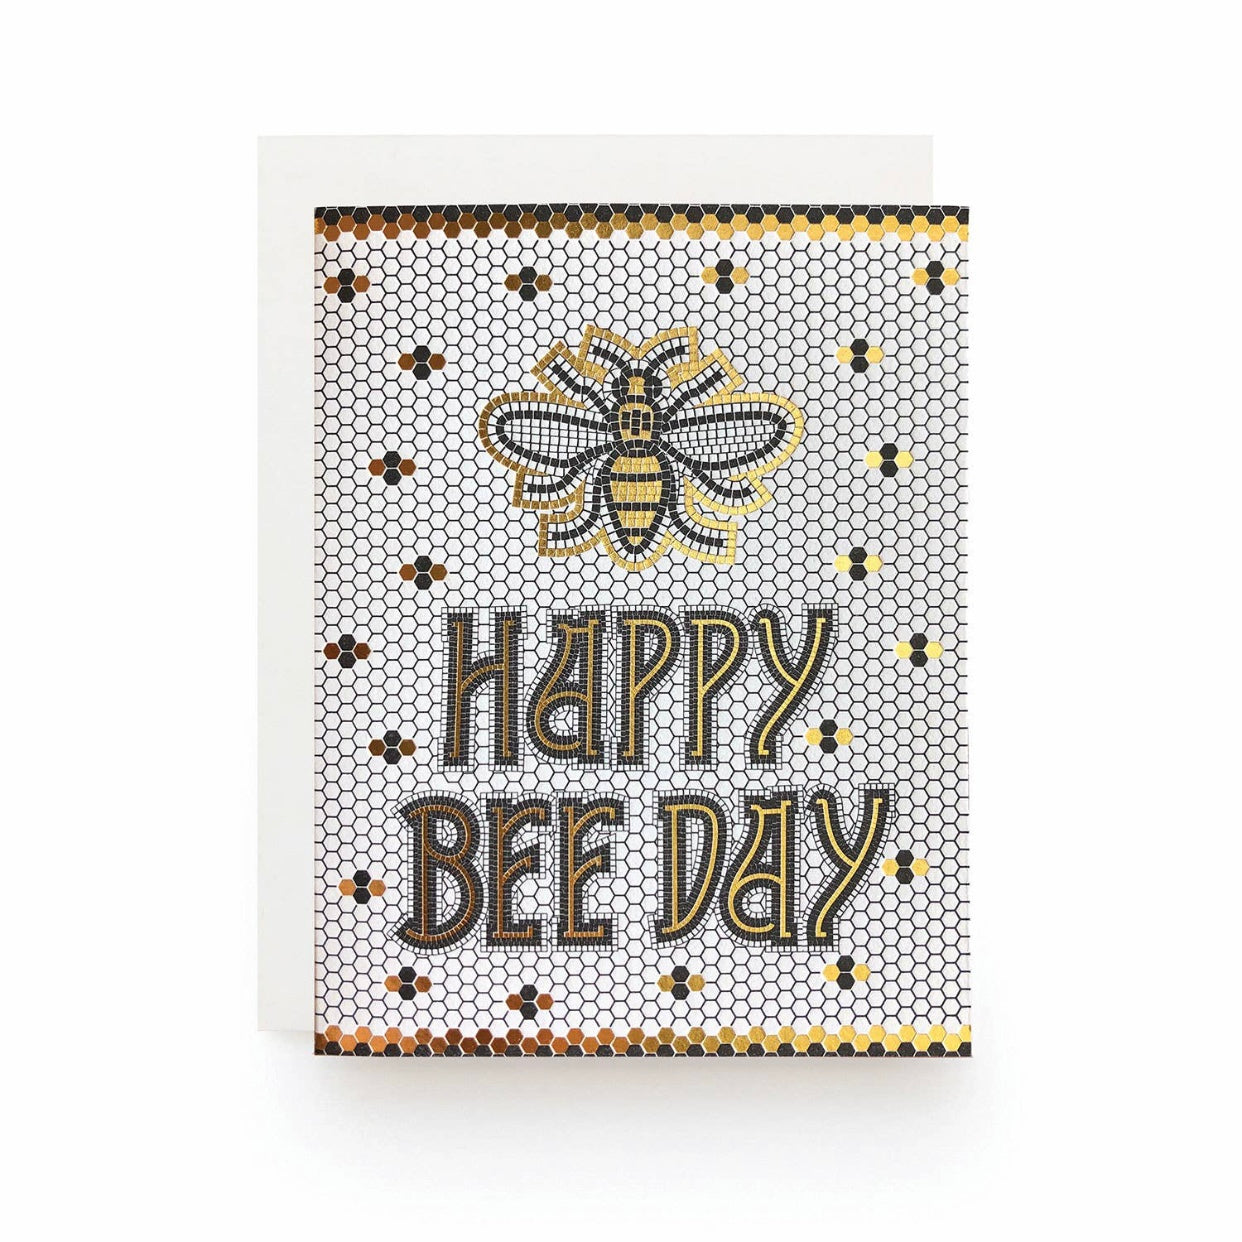 Happy Bee Day birthday greeting card